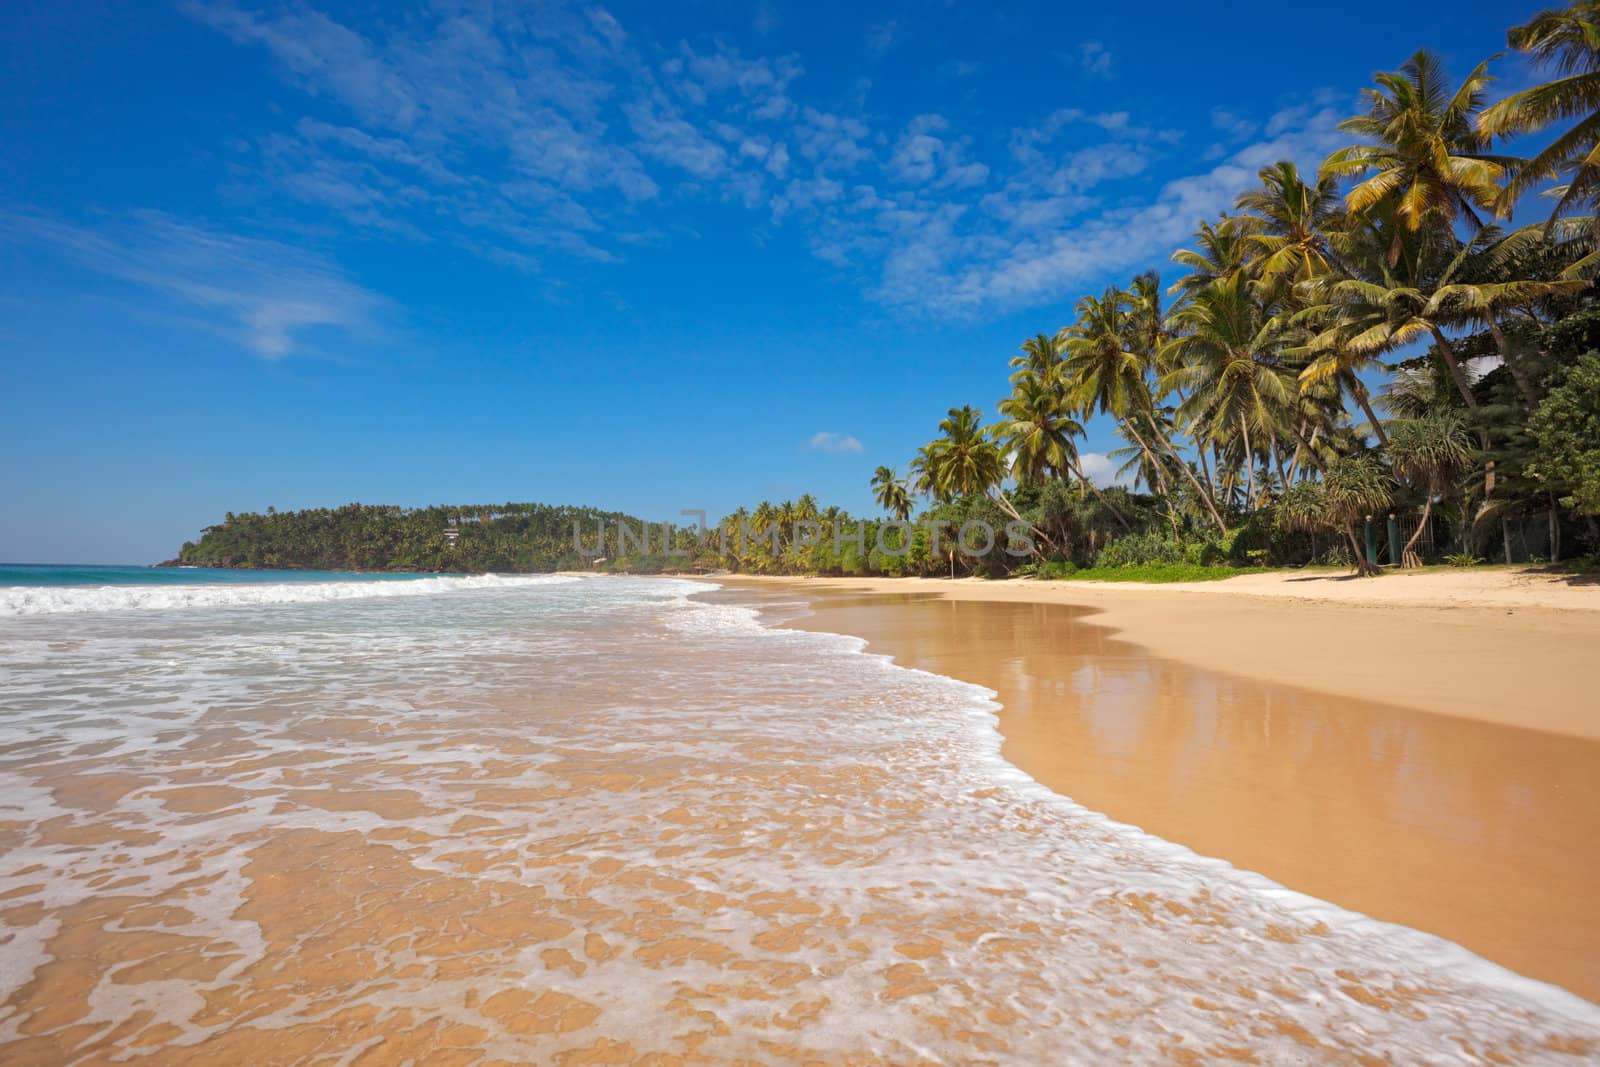 Idyllic beach. Sri Lanka by dimol